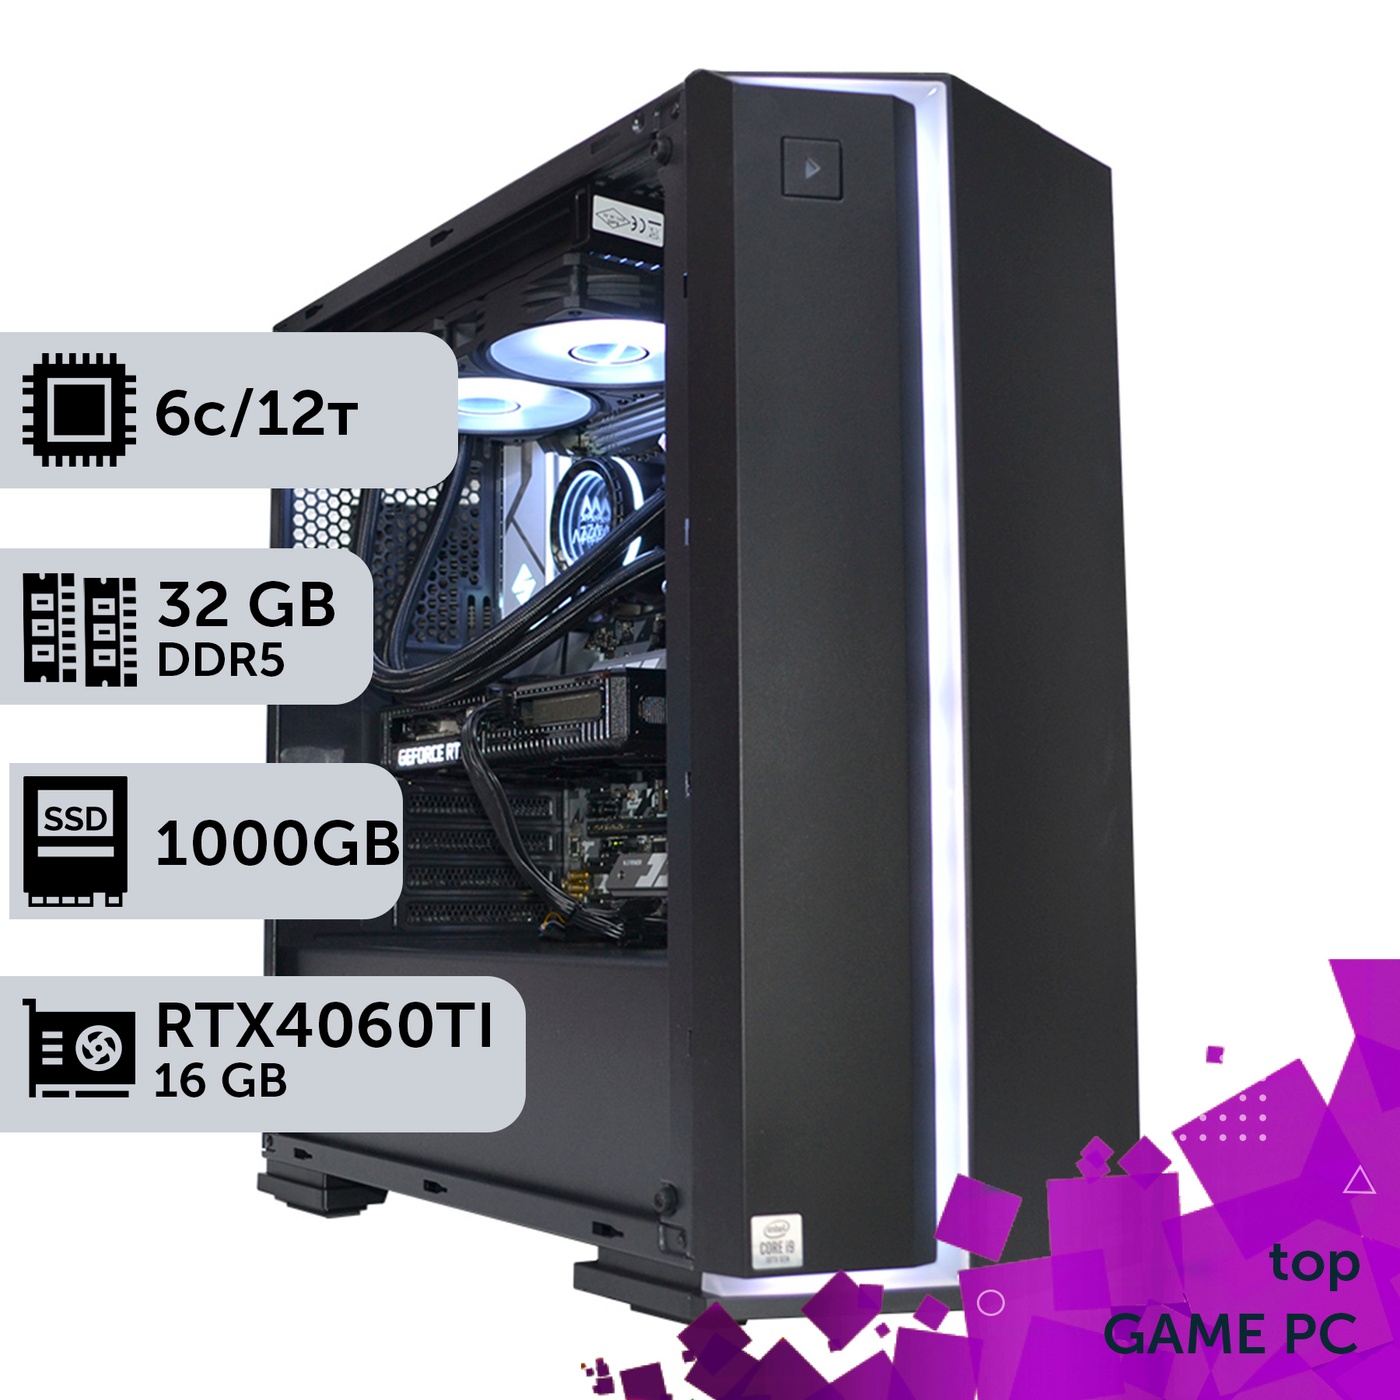 Игровой компьютер GamePC TOP #311 Ryzen 5 7500F/32 GB/SSD 1TB/GeForce RTX 4060Ti 16GB